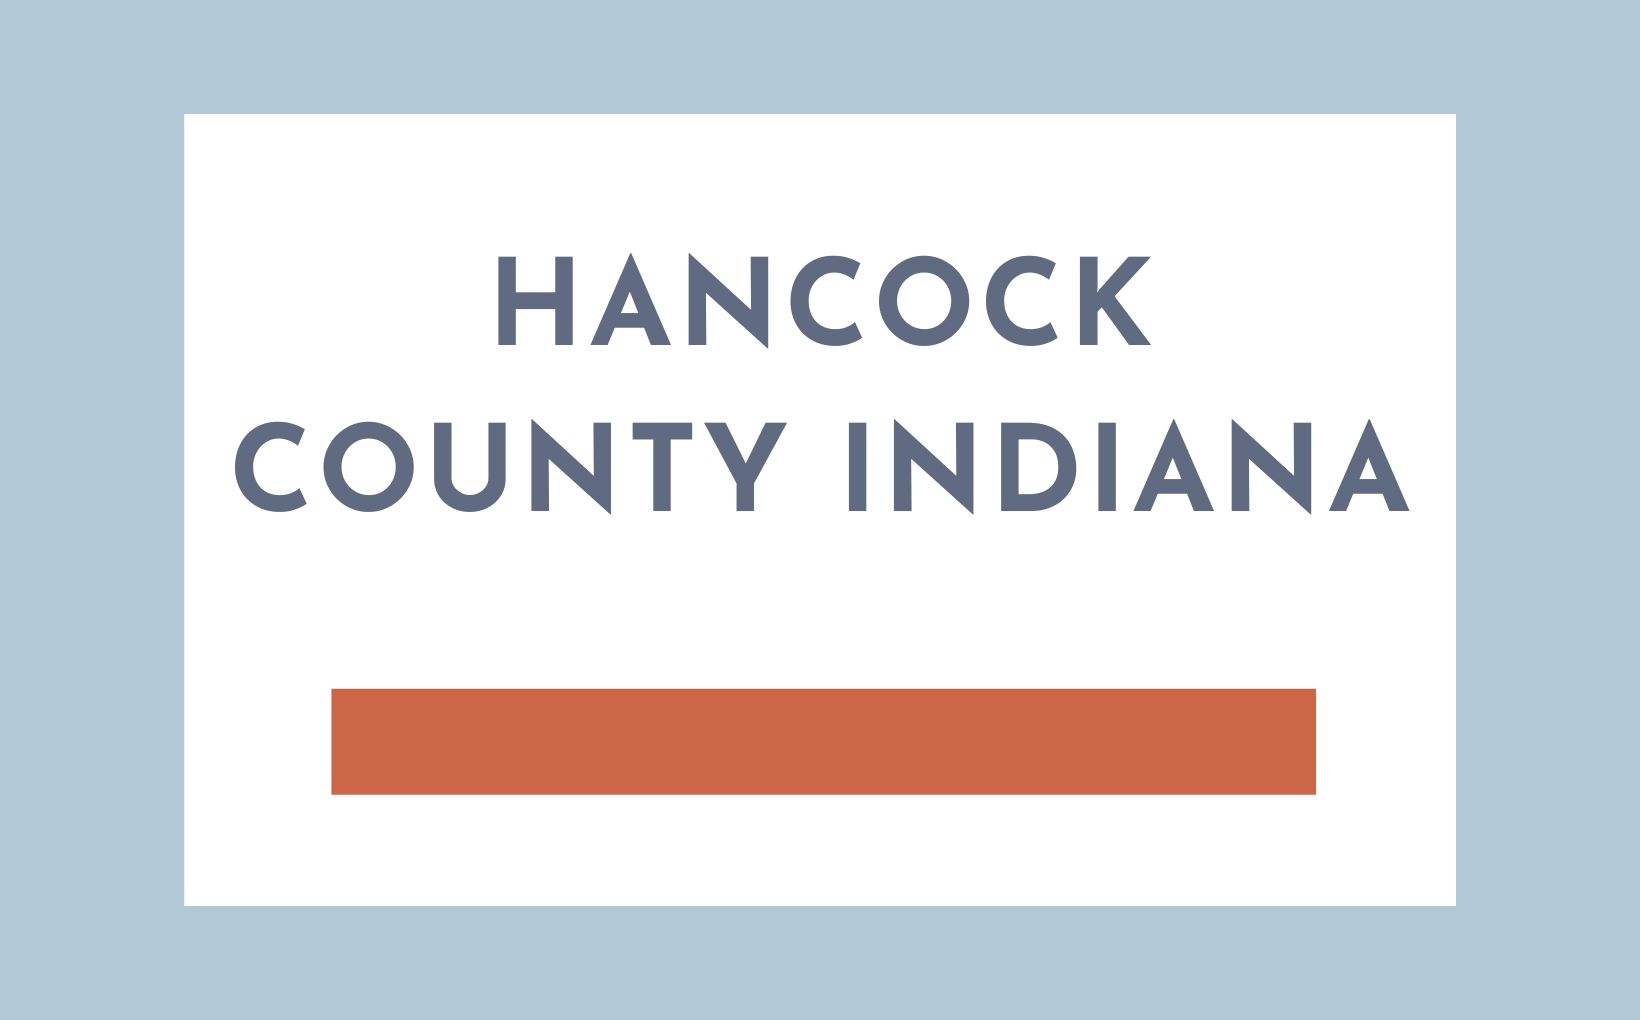 Hancock County Indiana feature image